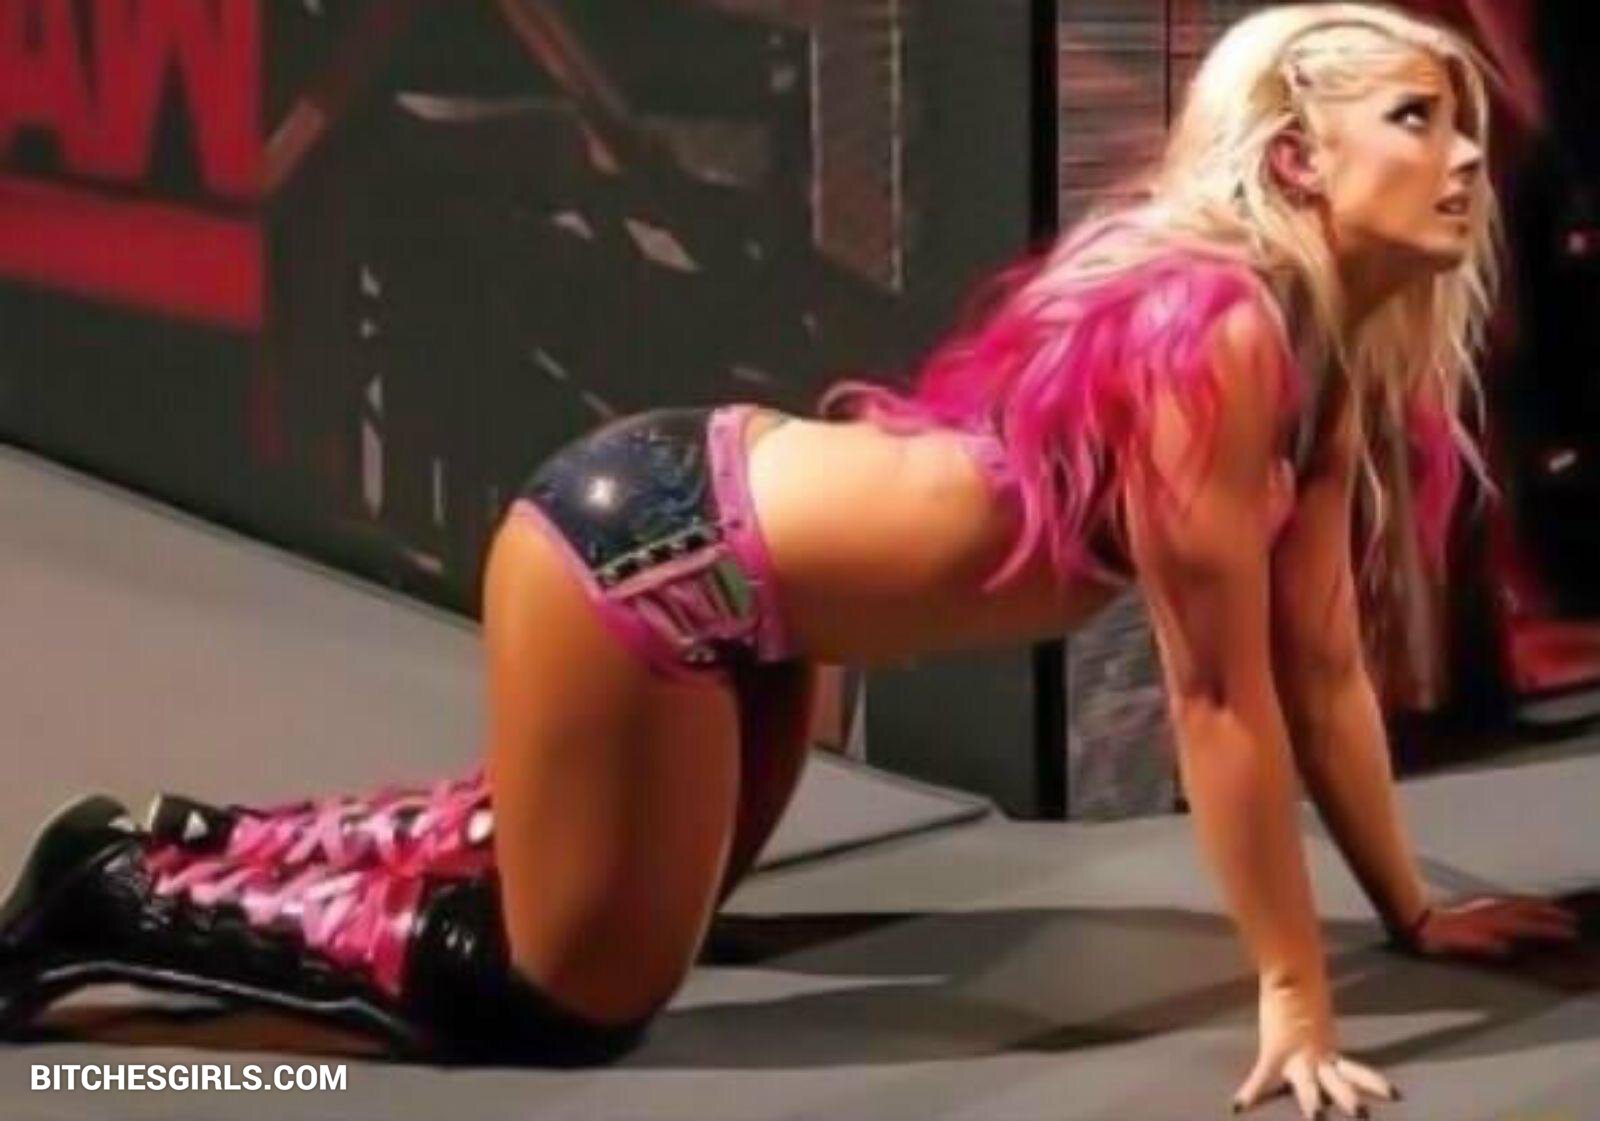 WWE Alexa Bliss.